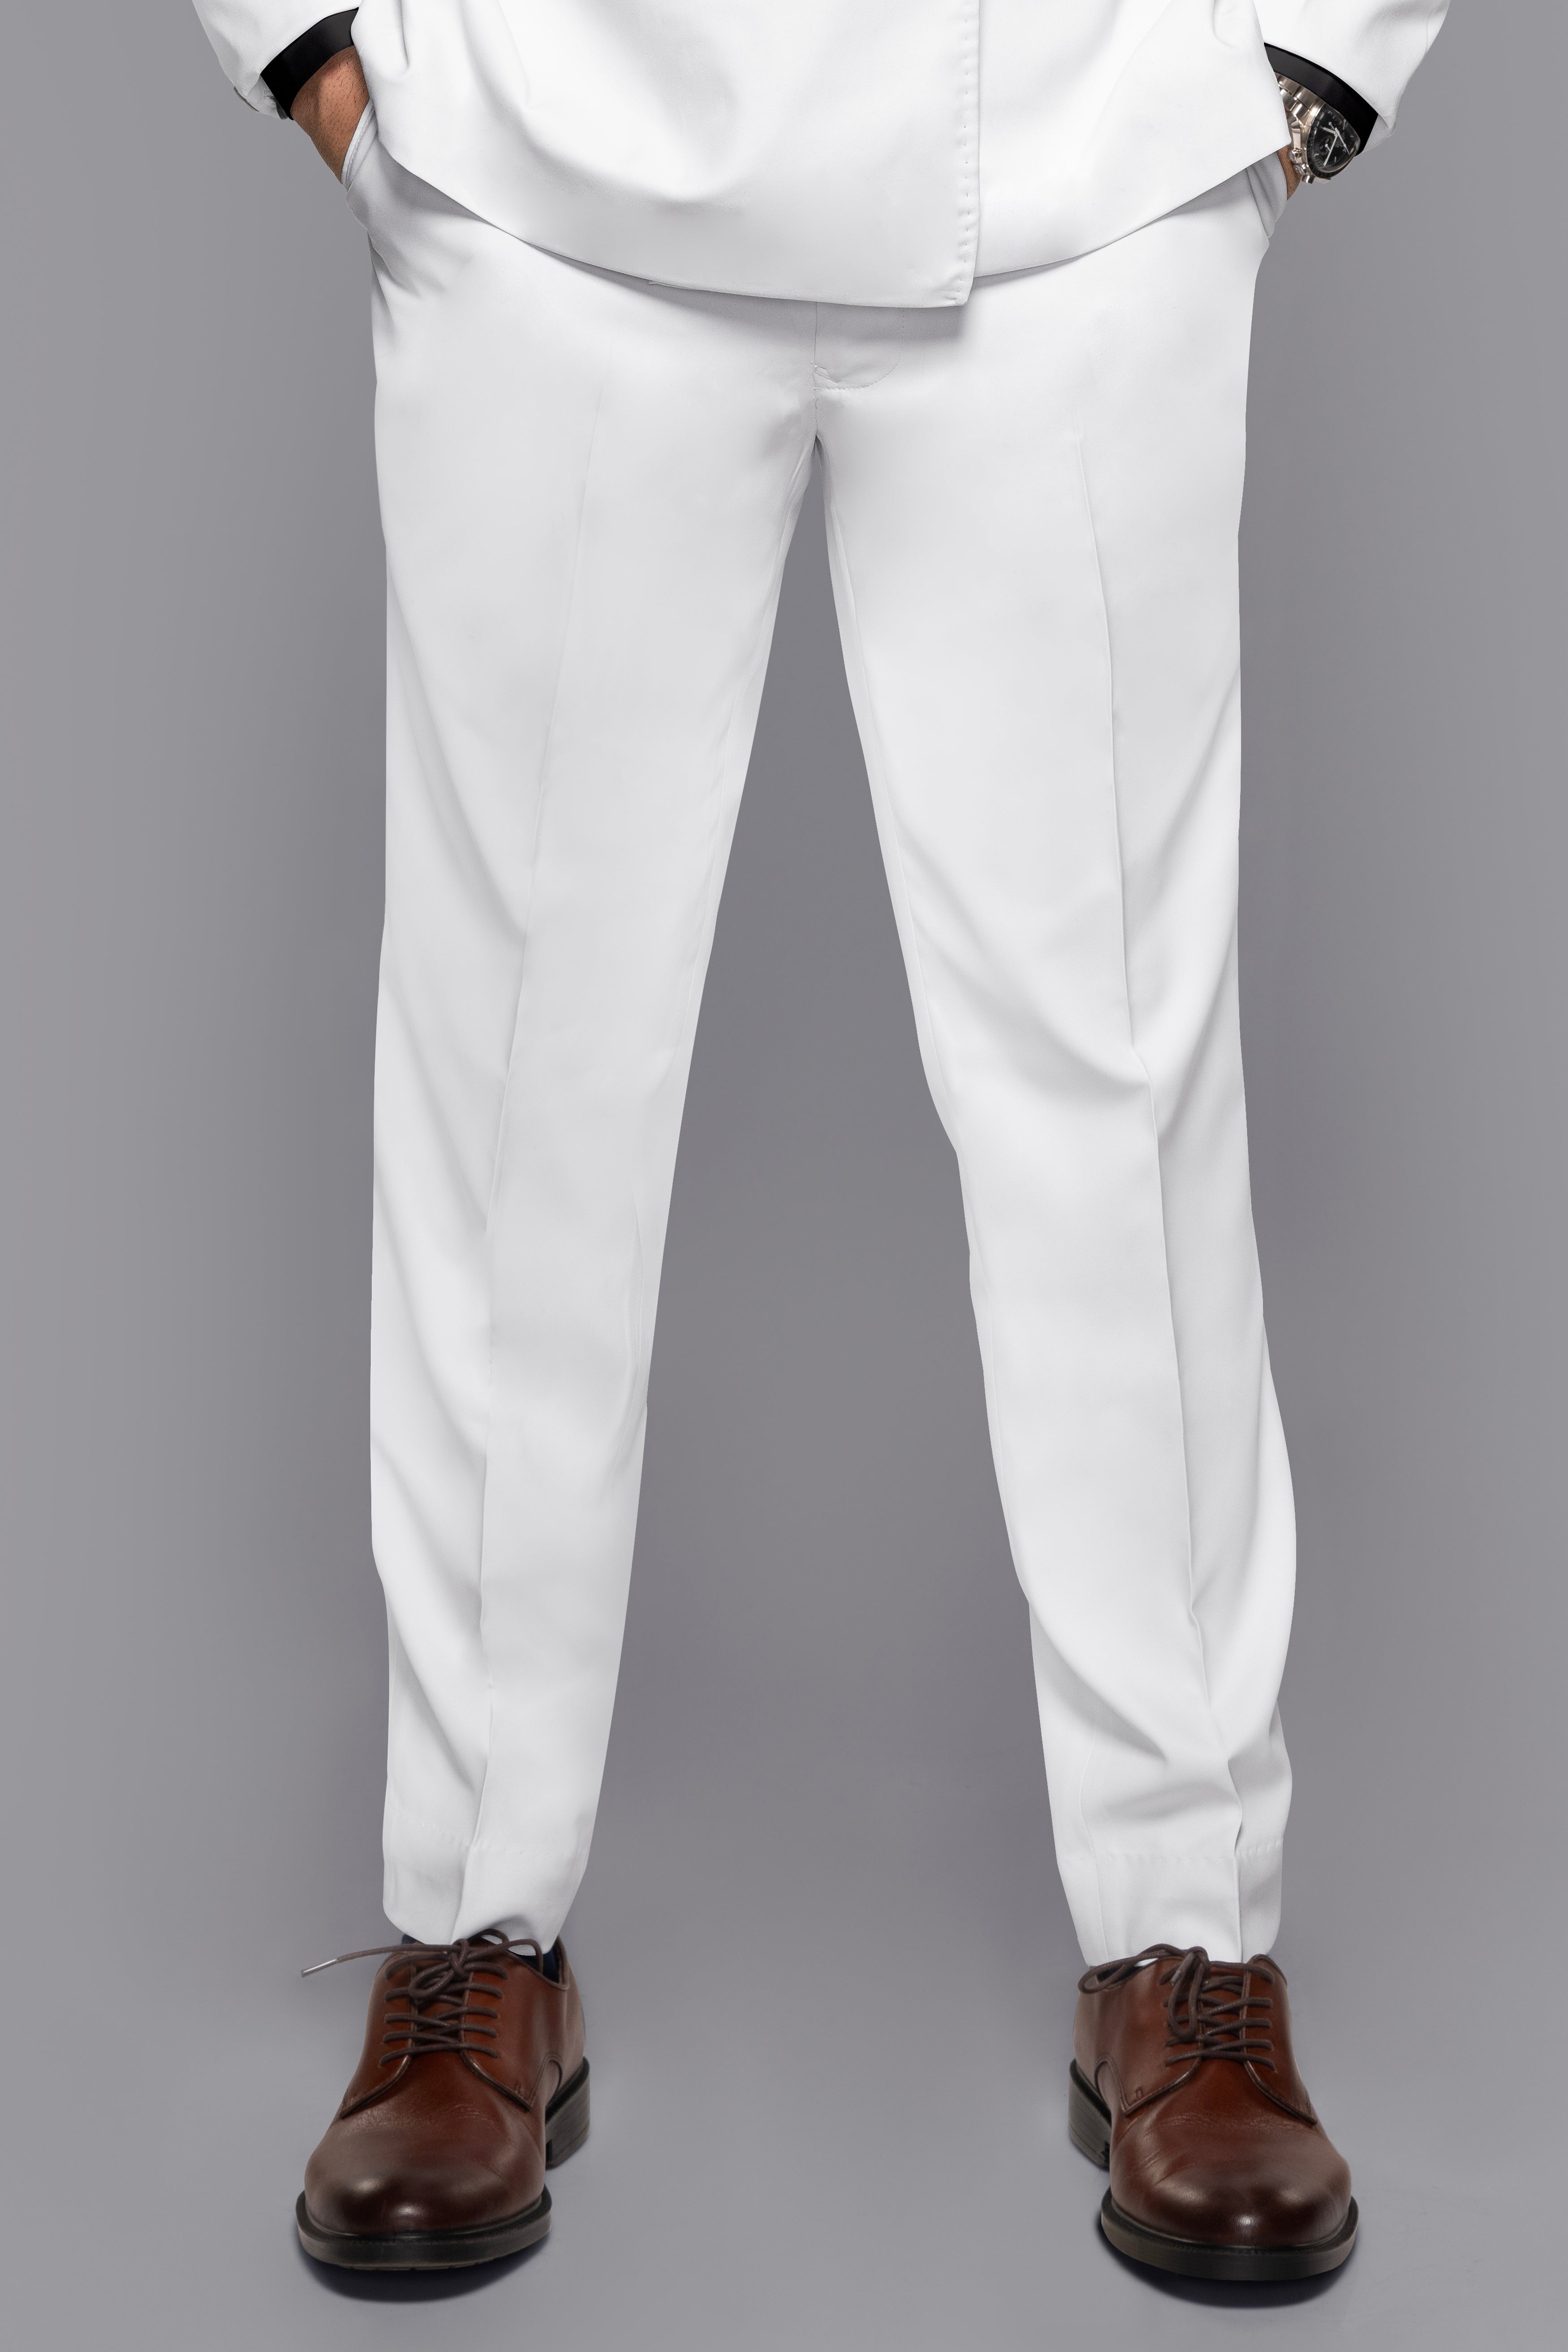 2023 Men Business Dress Pants Korean Style Slim Office Social Suit Pants  Casual Trousers Streetwear Black